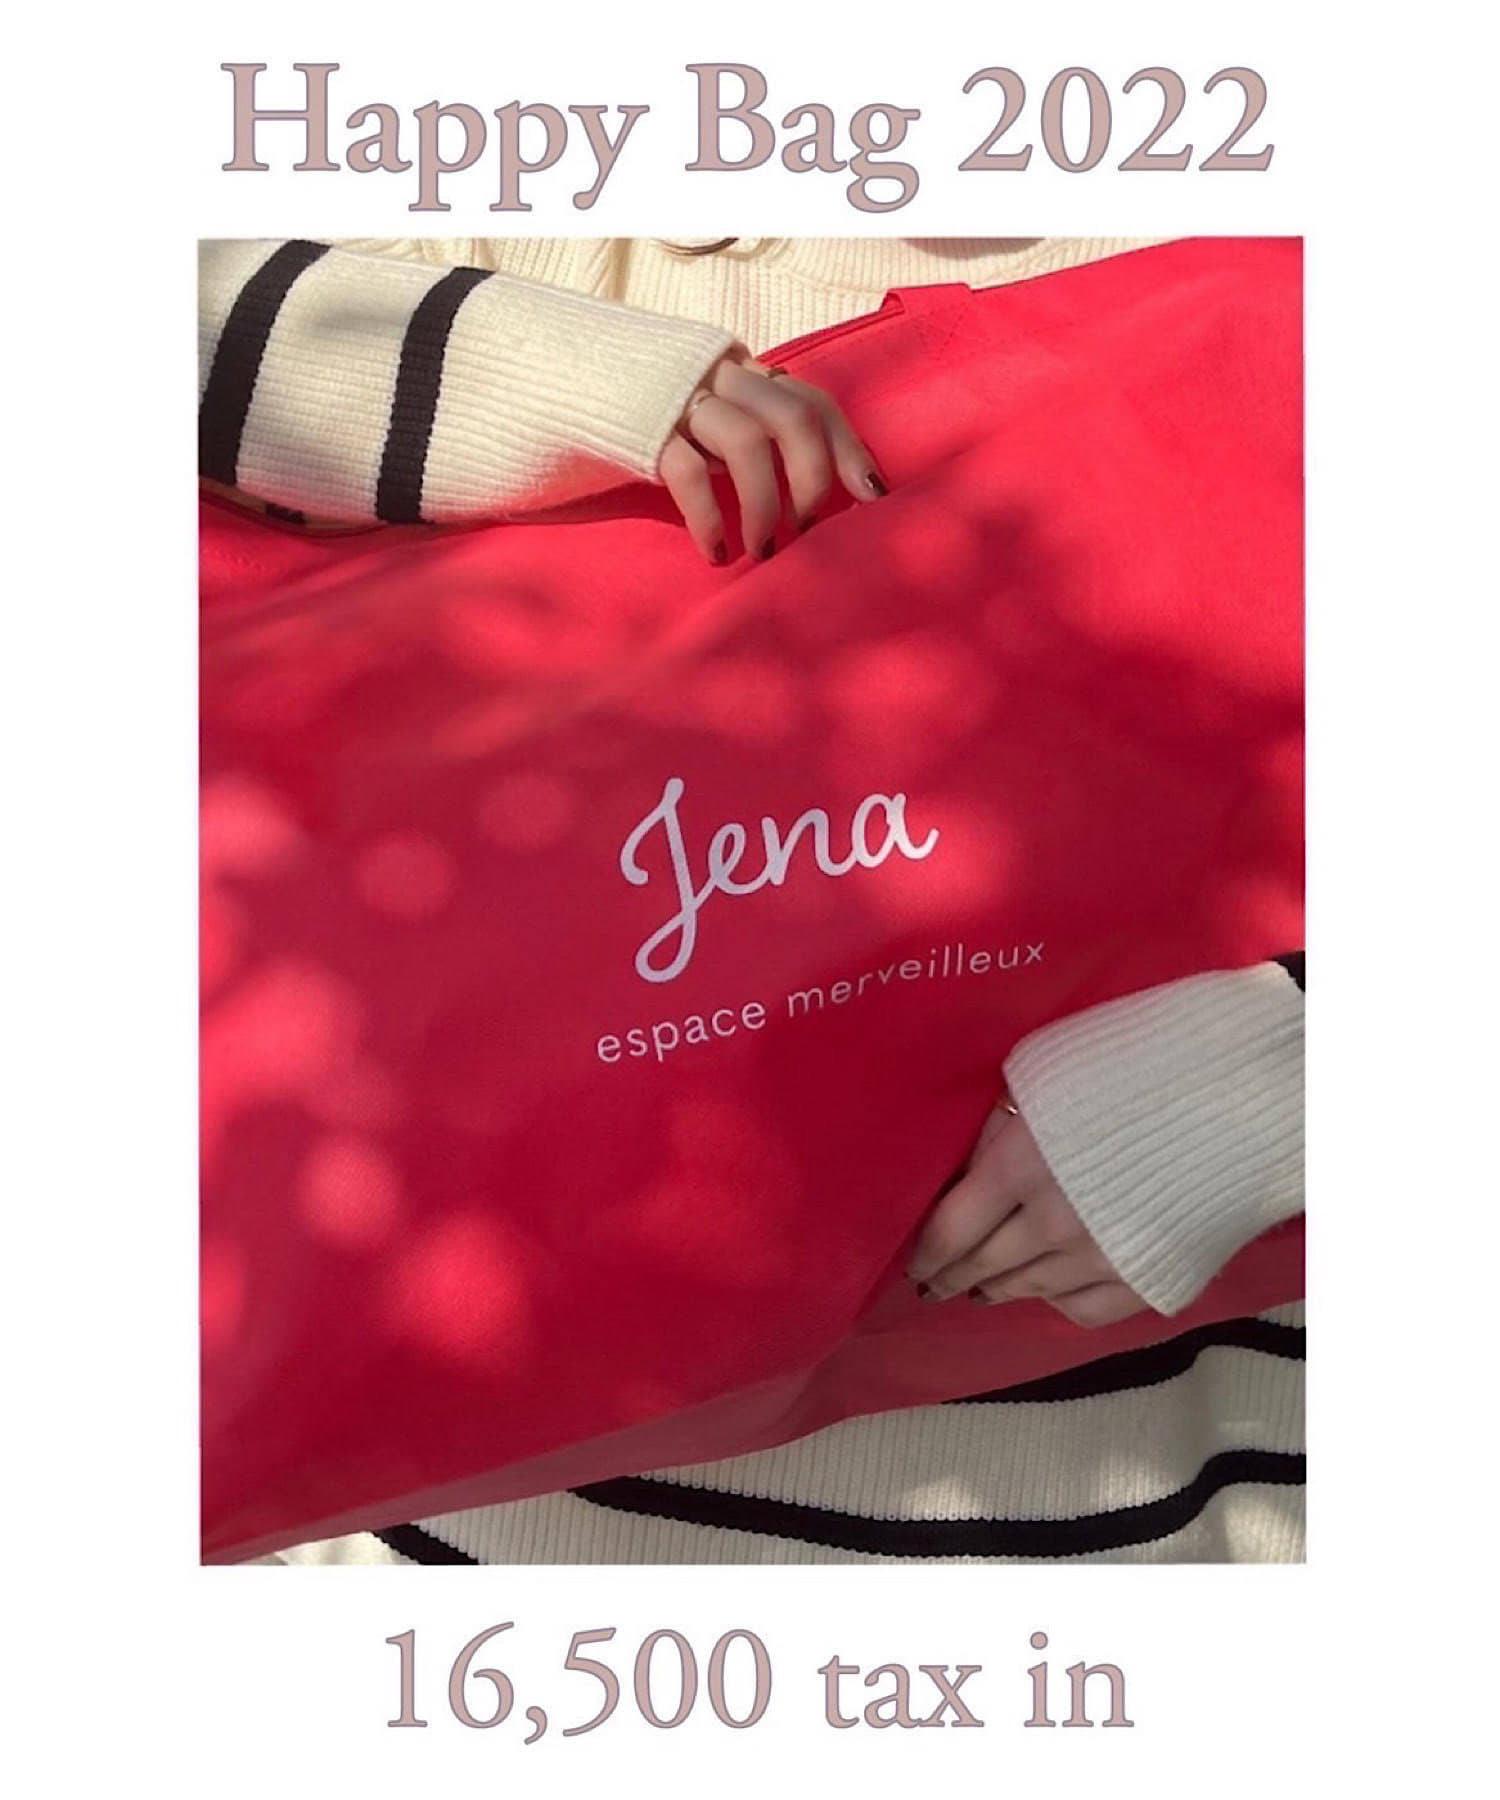 Jena　espace merveilleux(ジェナ　エスパスメルヴェイユ) 【2022福袋】Jena　espace merveilleux　◆予約特典あり◆